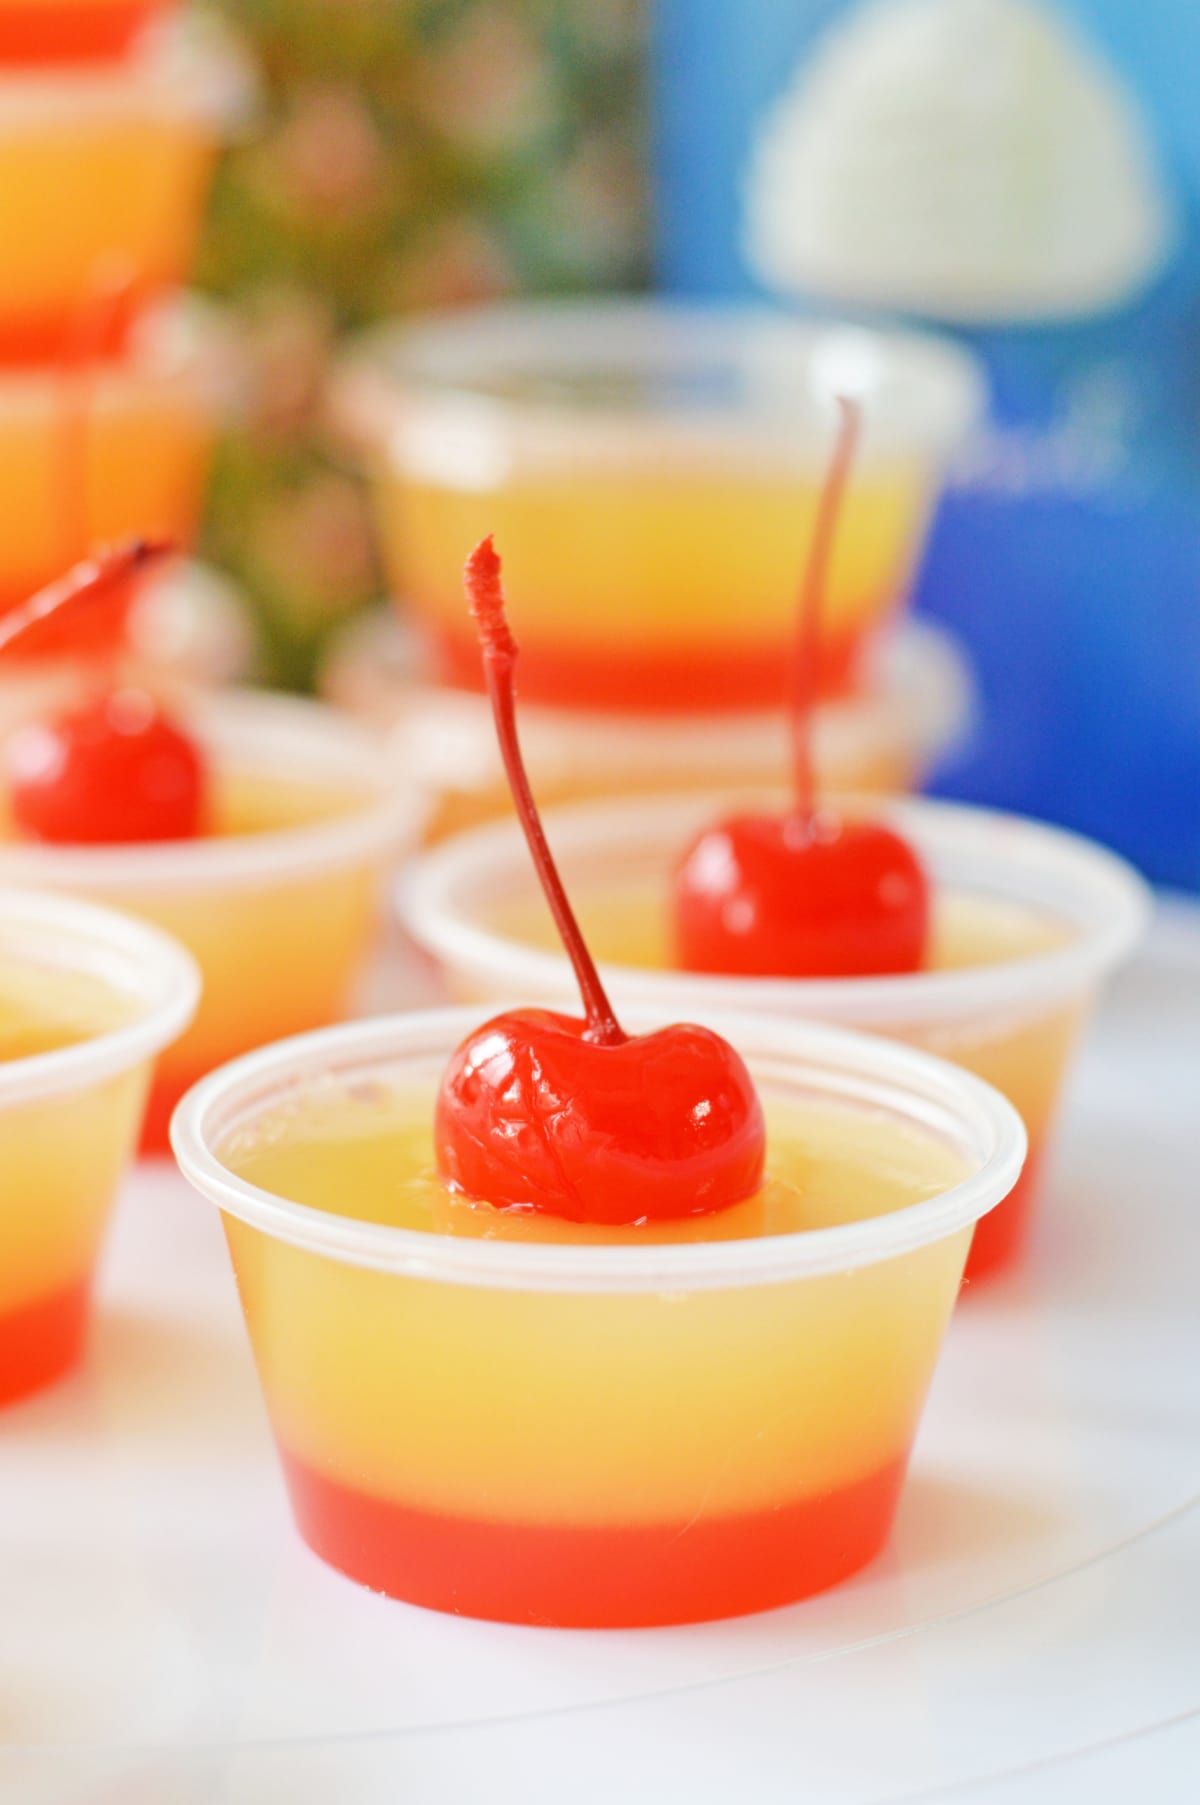 Pineapple upside down cake jello shot with cherry